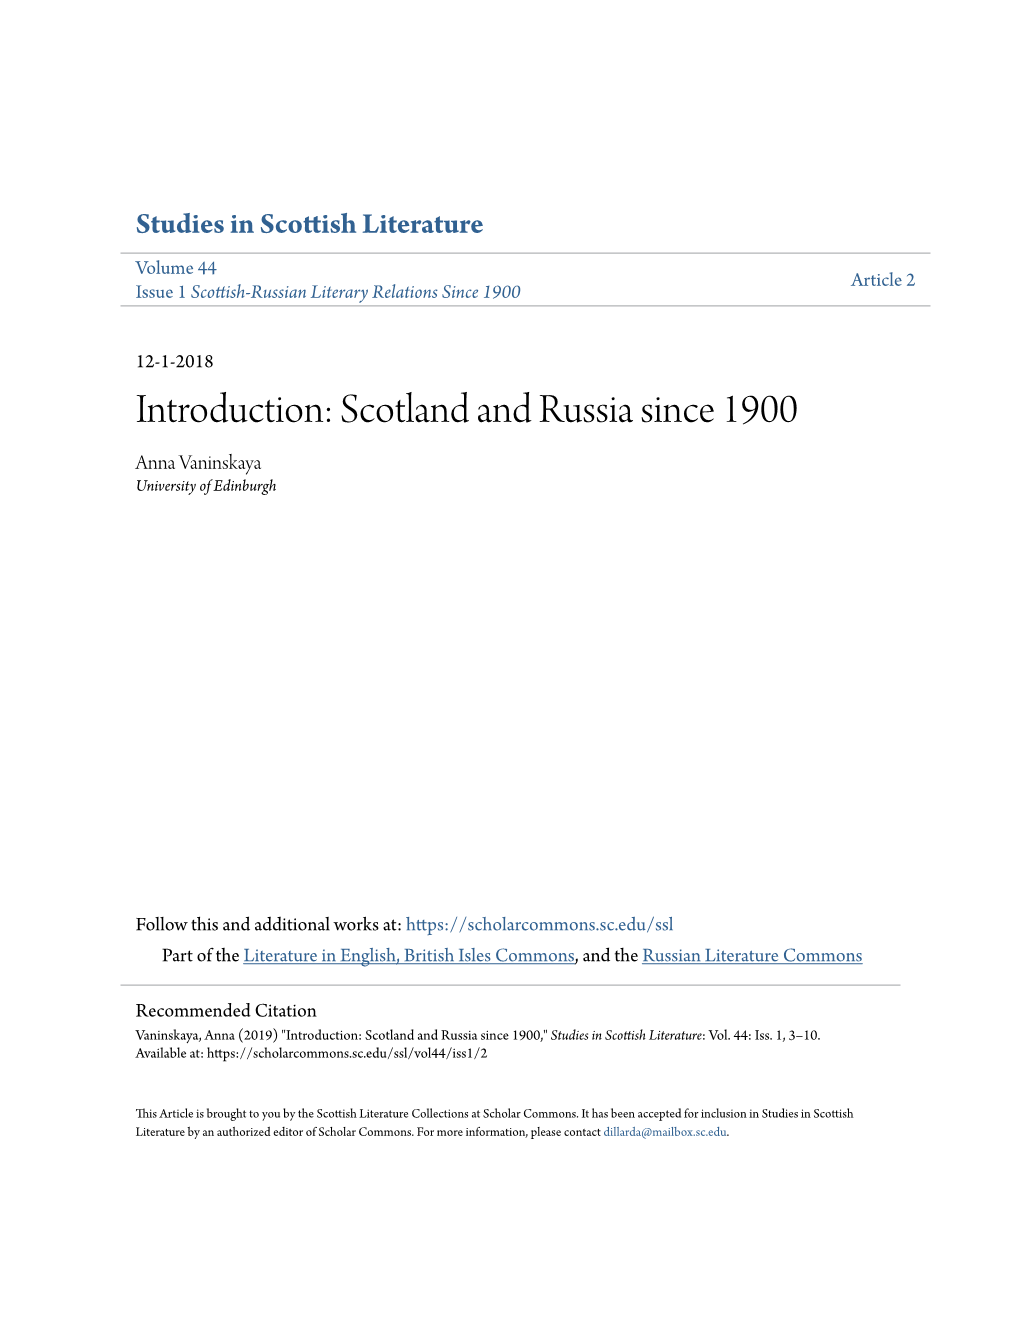 Introduction: Scotland and Russia Since 1900 Anna Vaninskaya University of Edinburgh